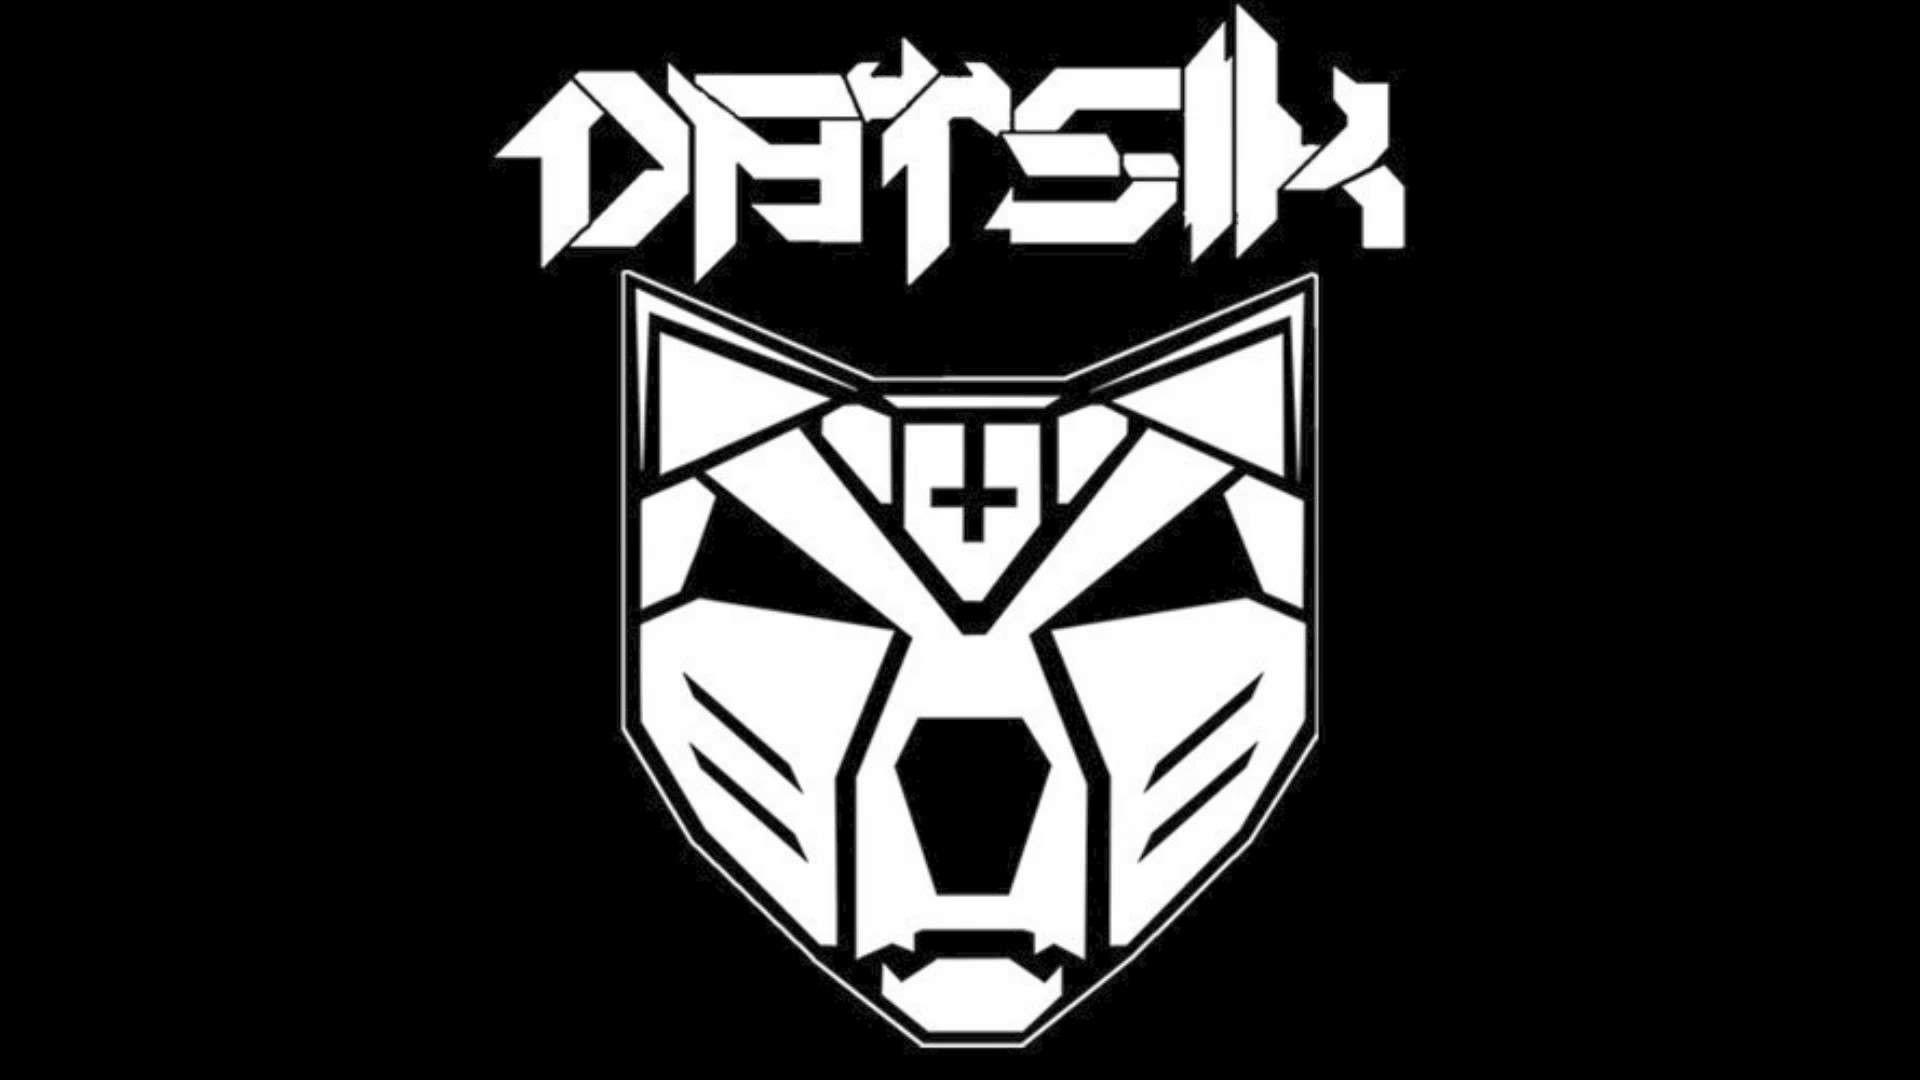 Datsik Logo - Datsik Wallpaper